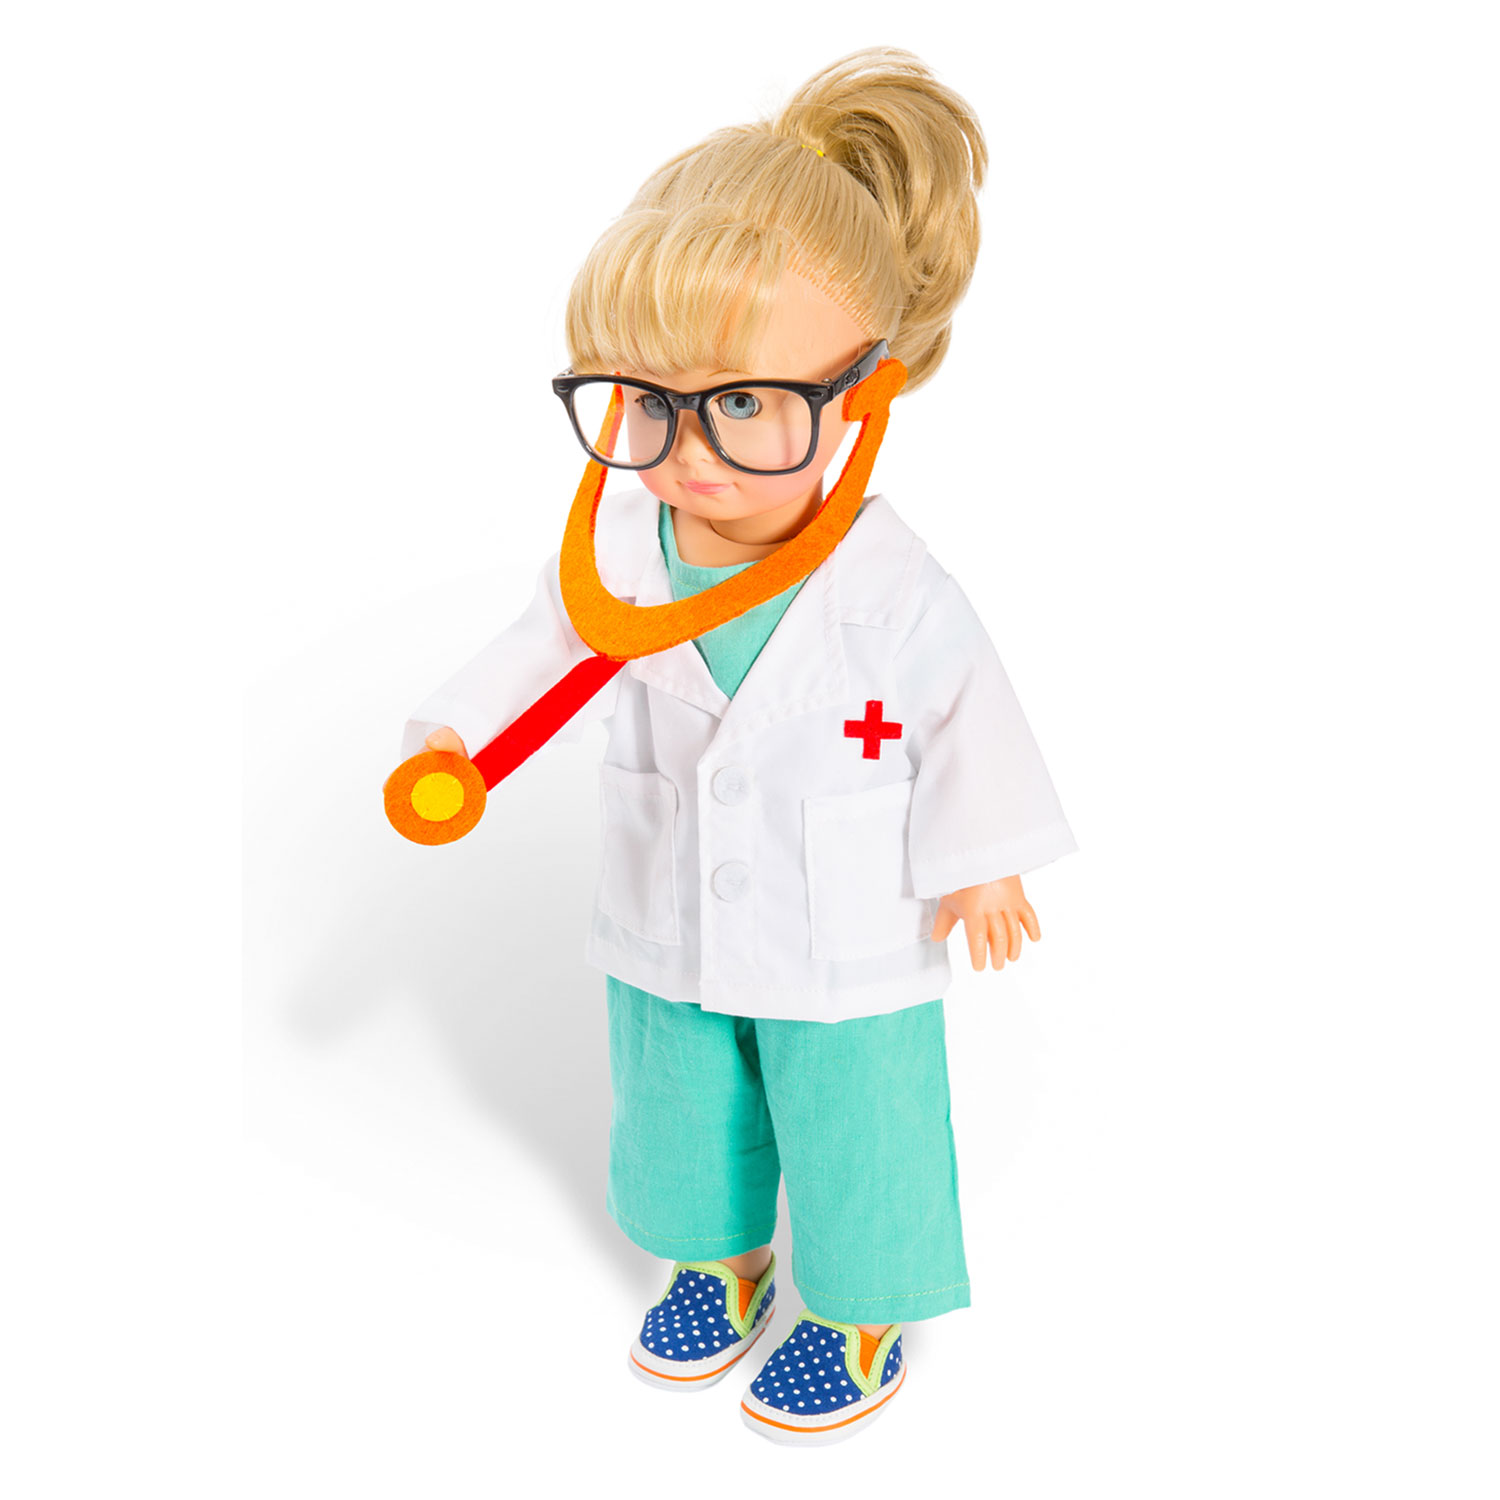 Puppen-Arzt-Outfit mit Stethoskop, 28-35 cm